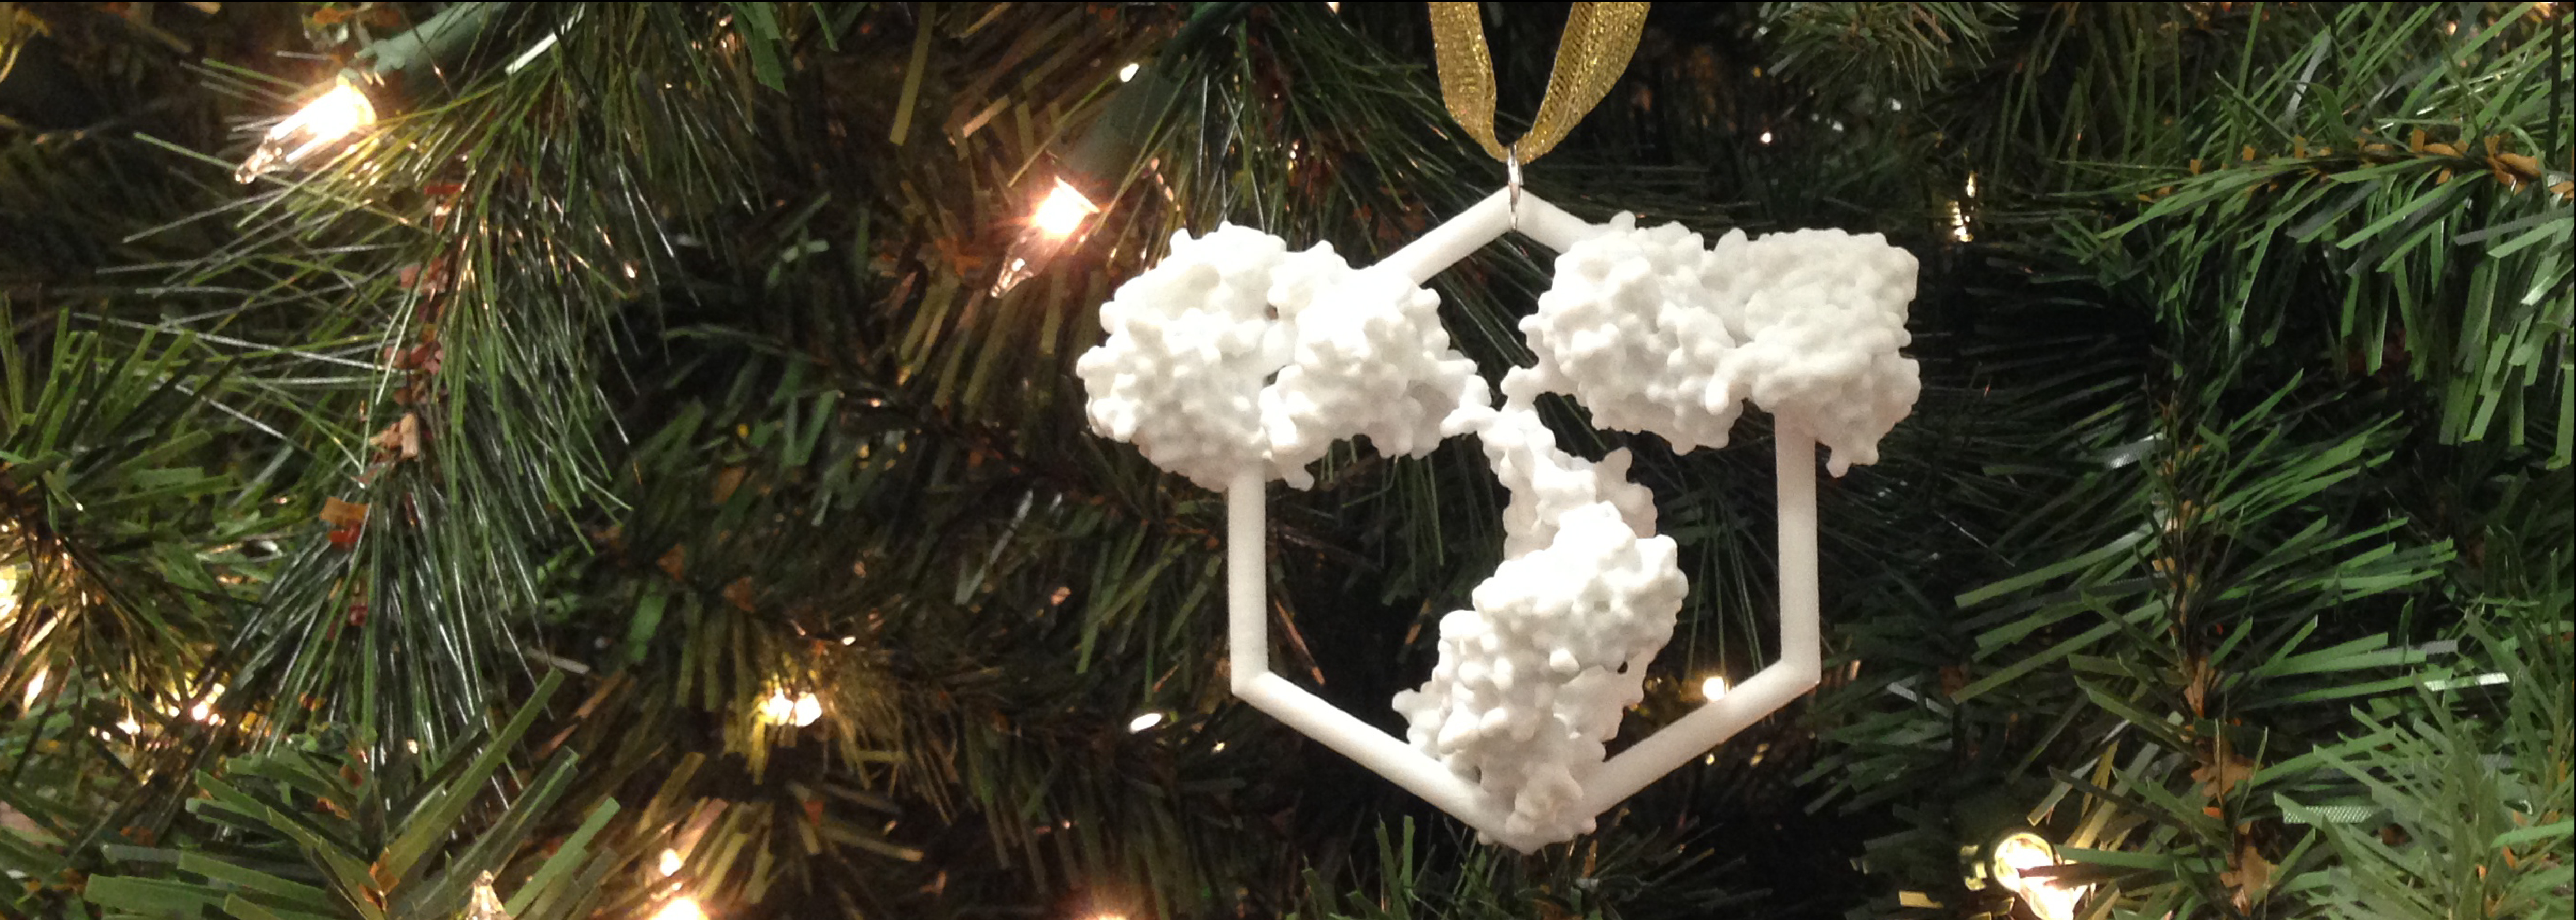 The Antibody Snowflake Ornament